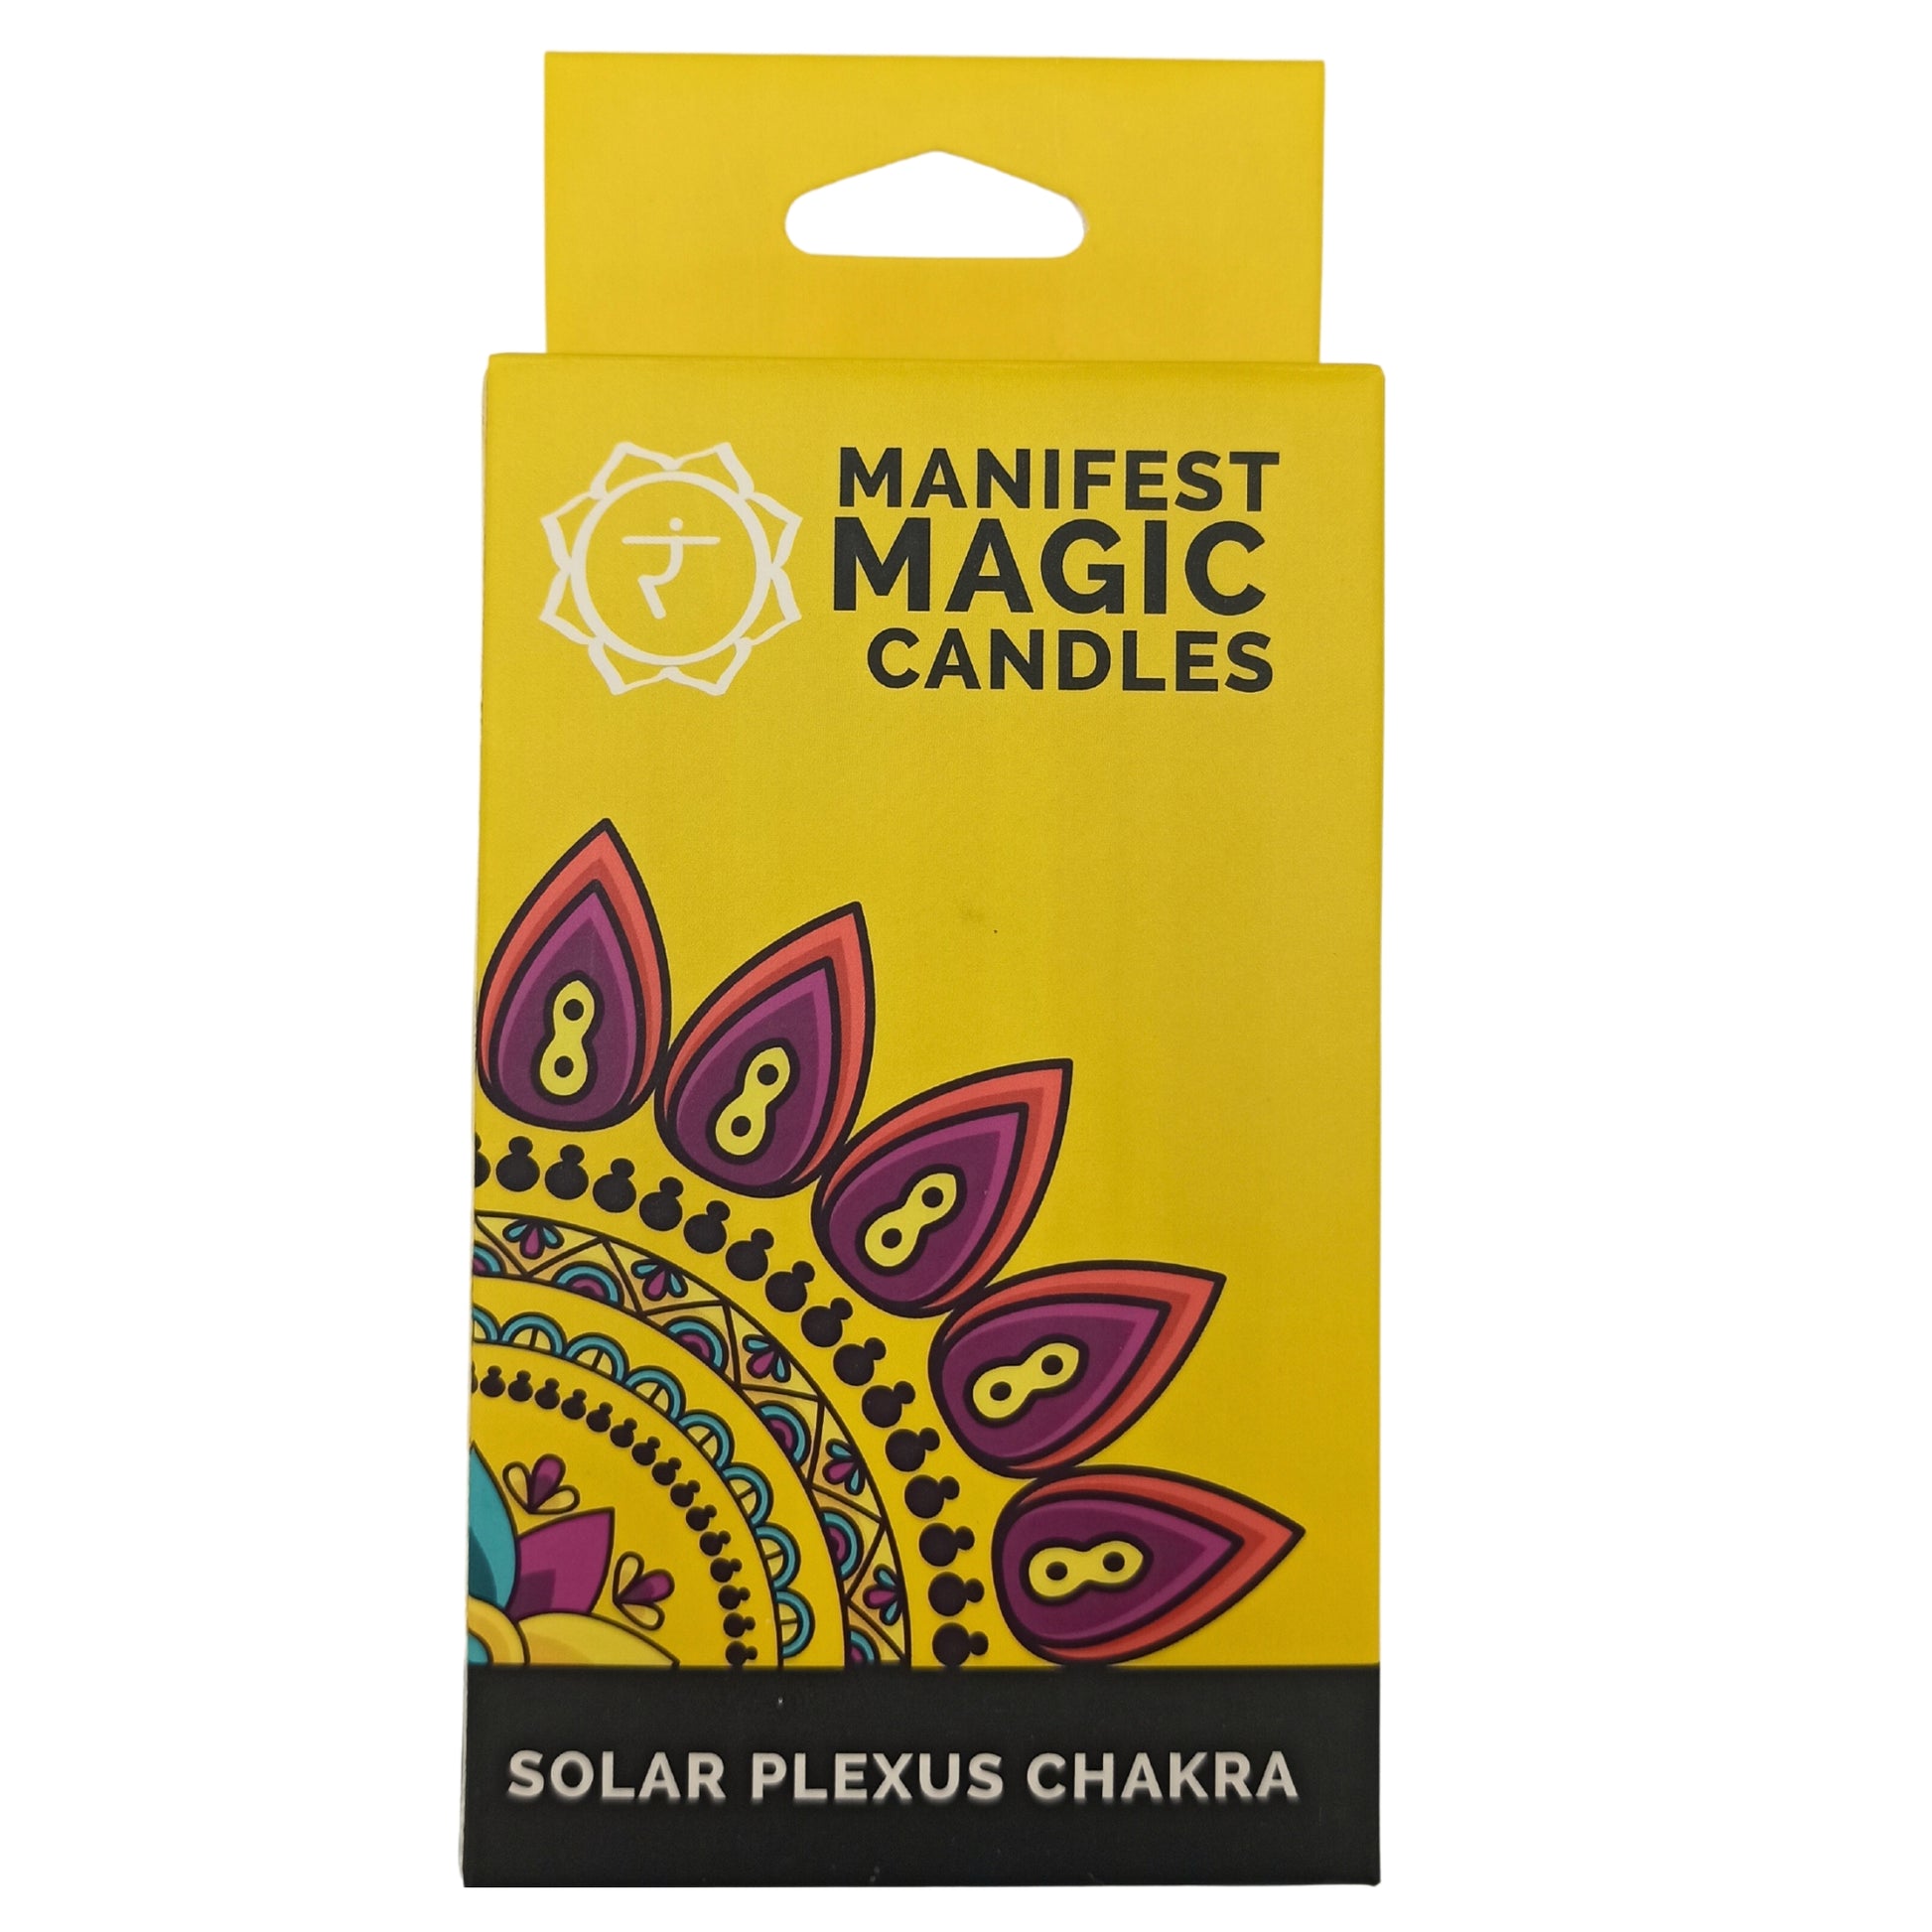 Manifest Magic Candles (pack of 12) - Yellow - Solar Plexus Chakra - Kaftans direct